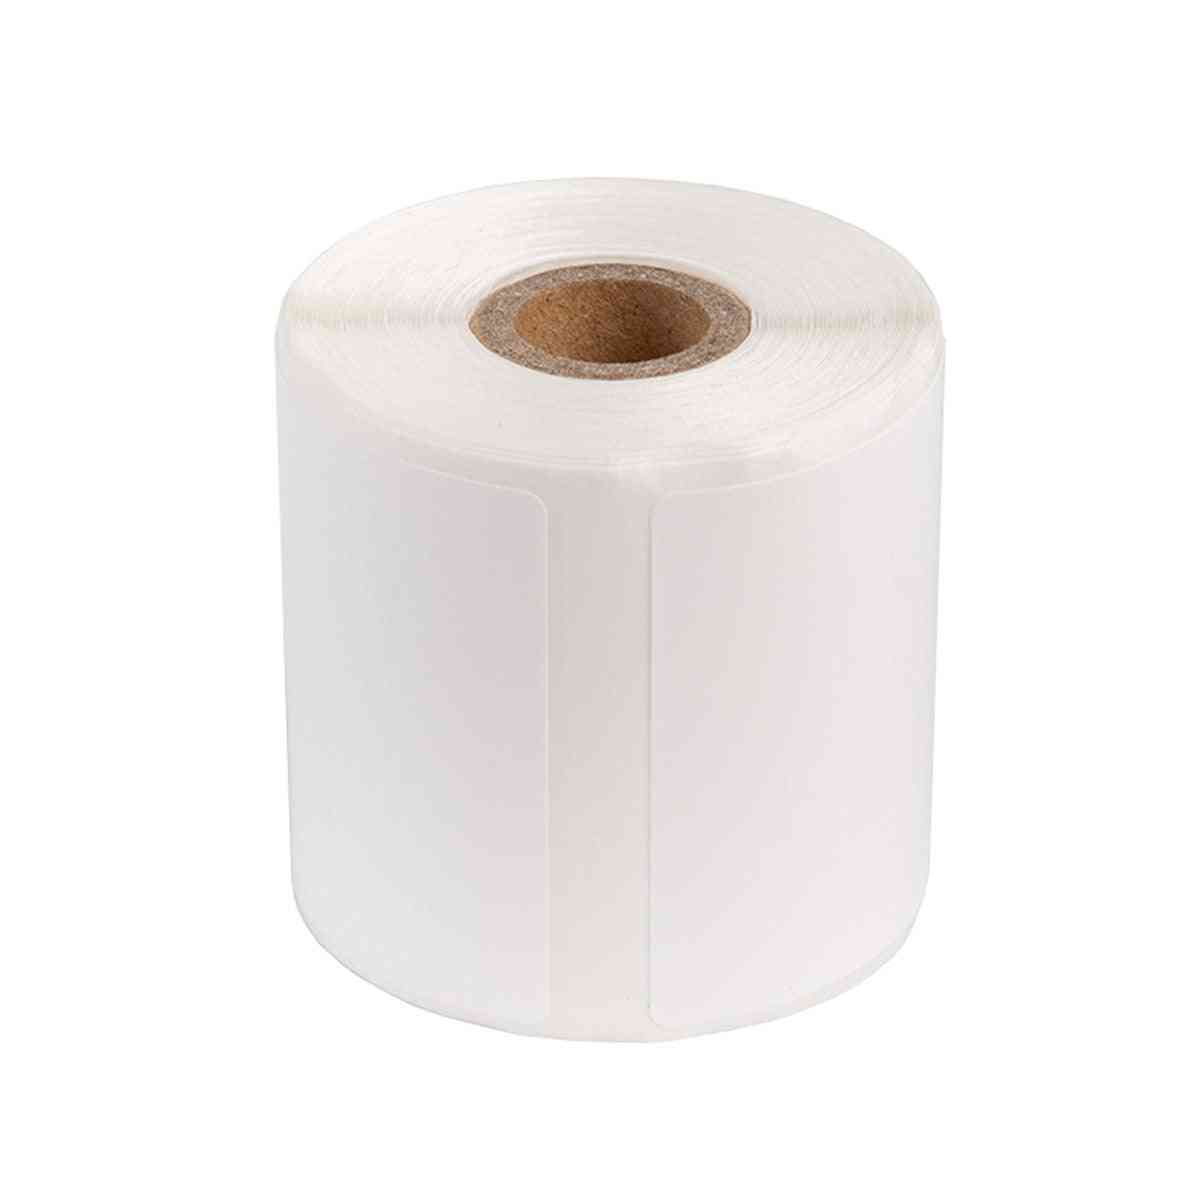 Self-adhesive Thermal Paper Roll